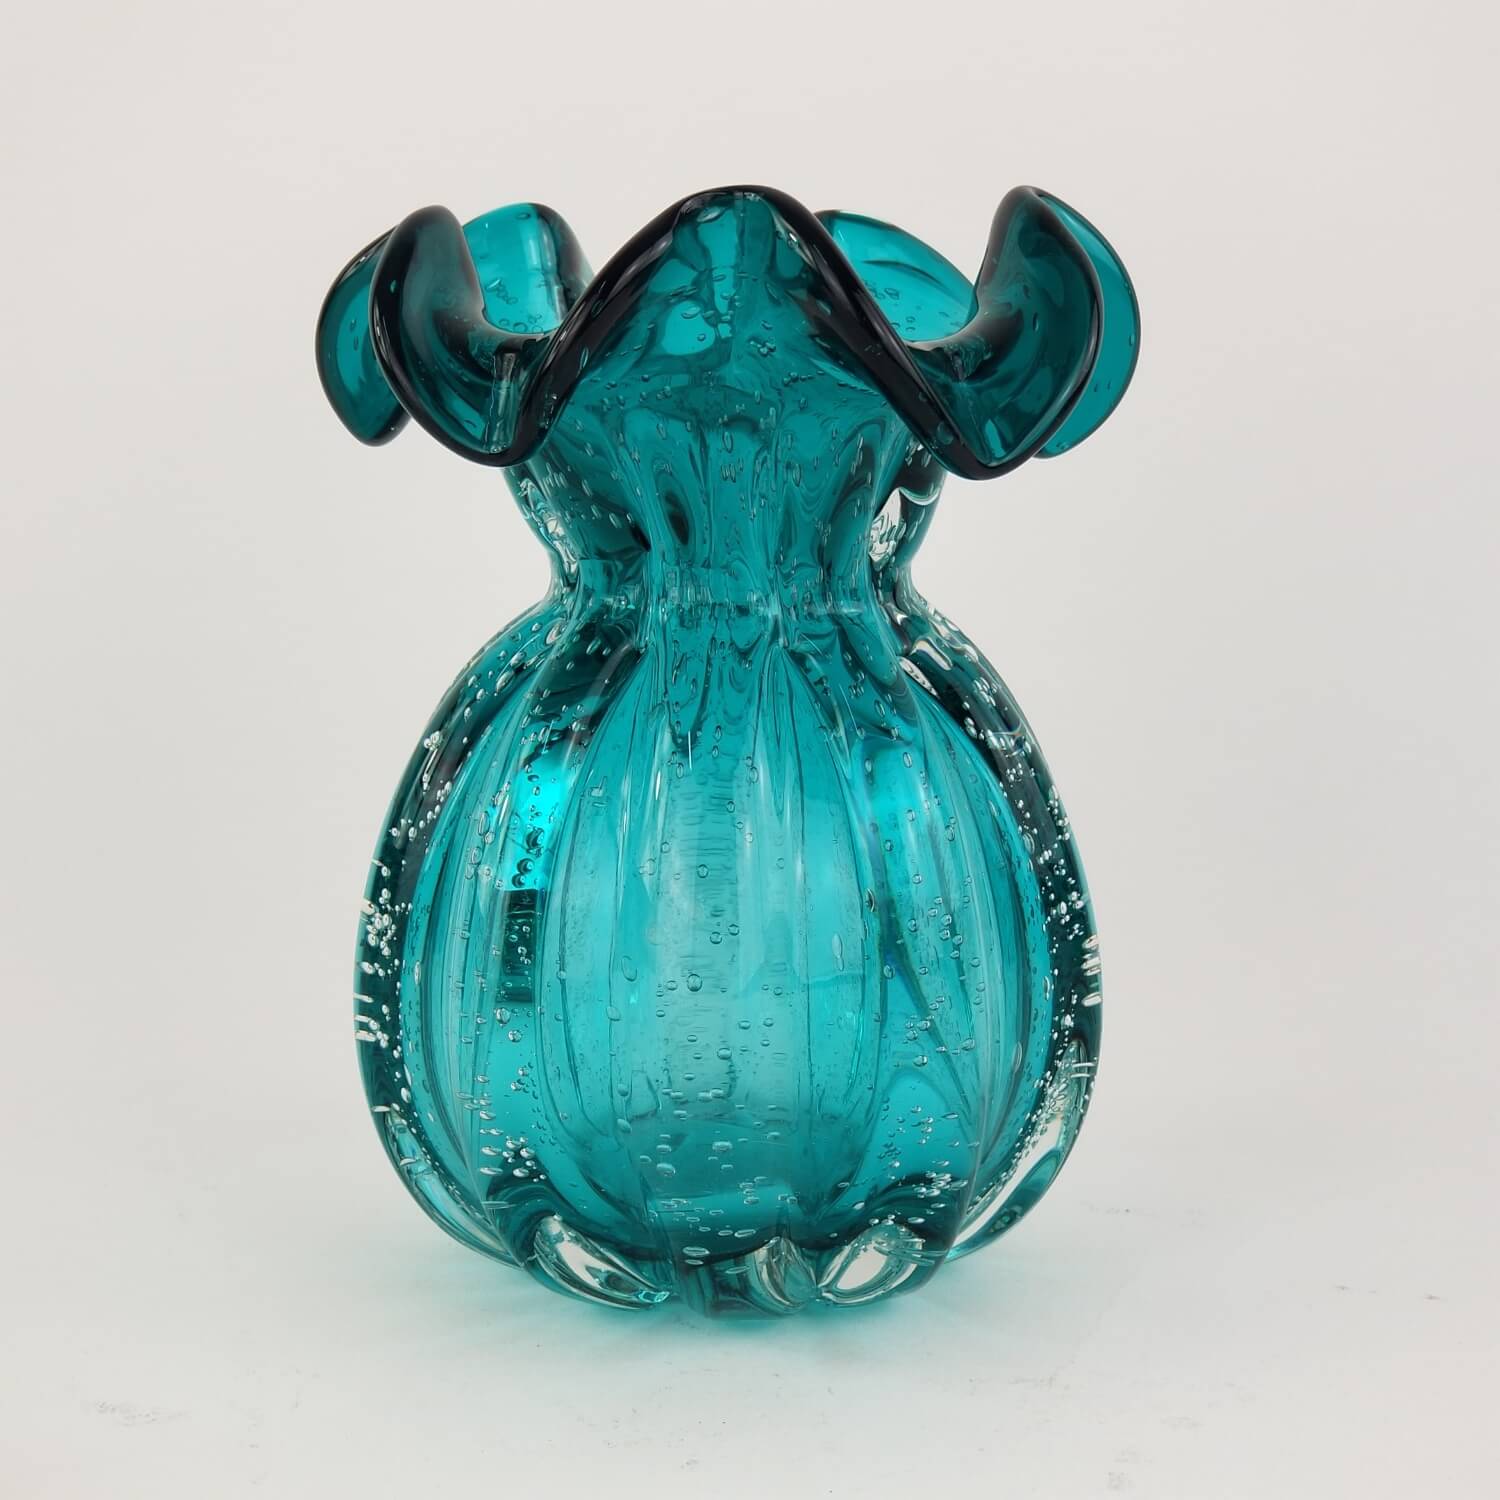 Trouxinha de Cristal Murano - Vaso Decorativo Verde Esmeralda